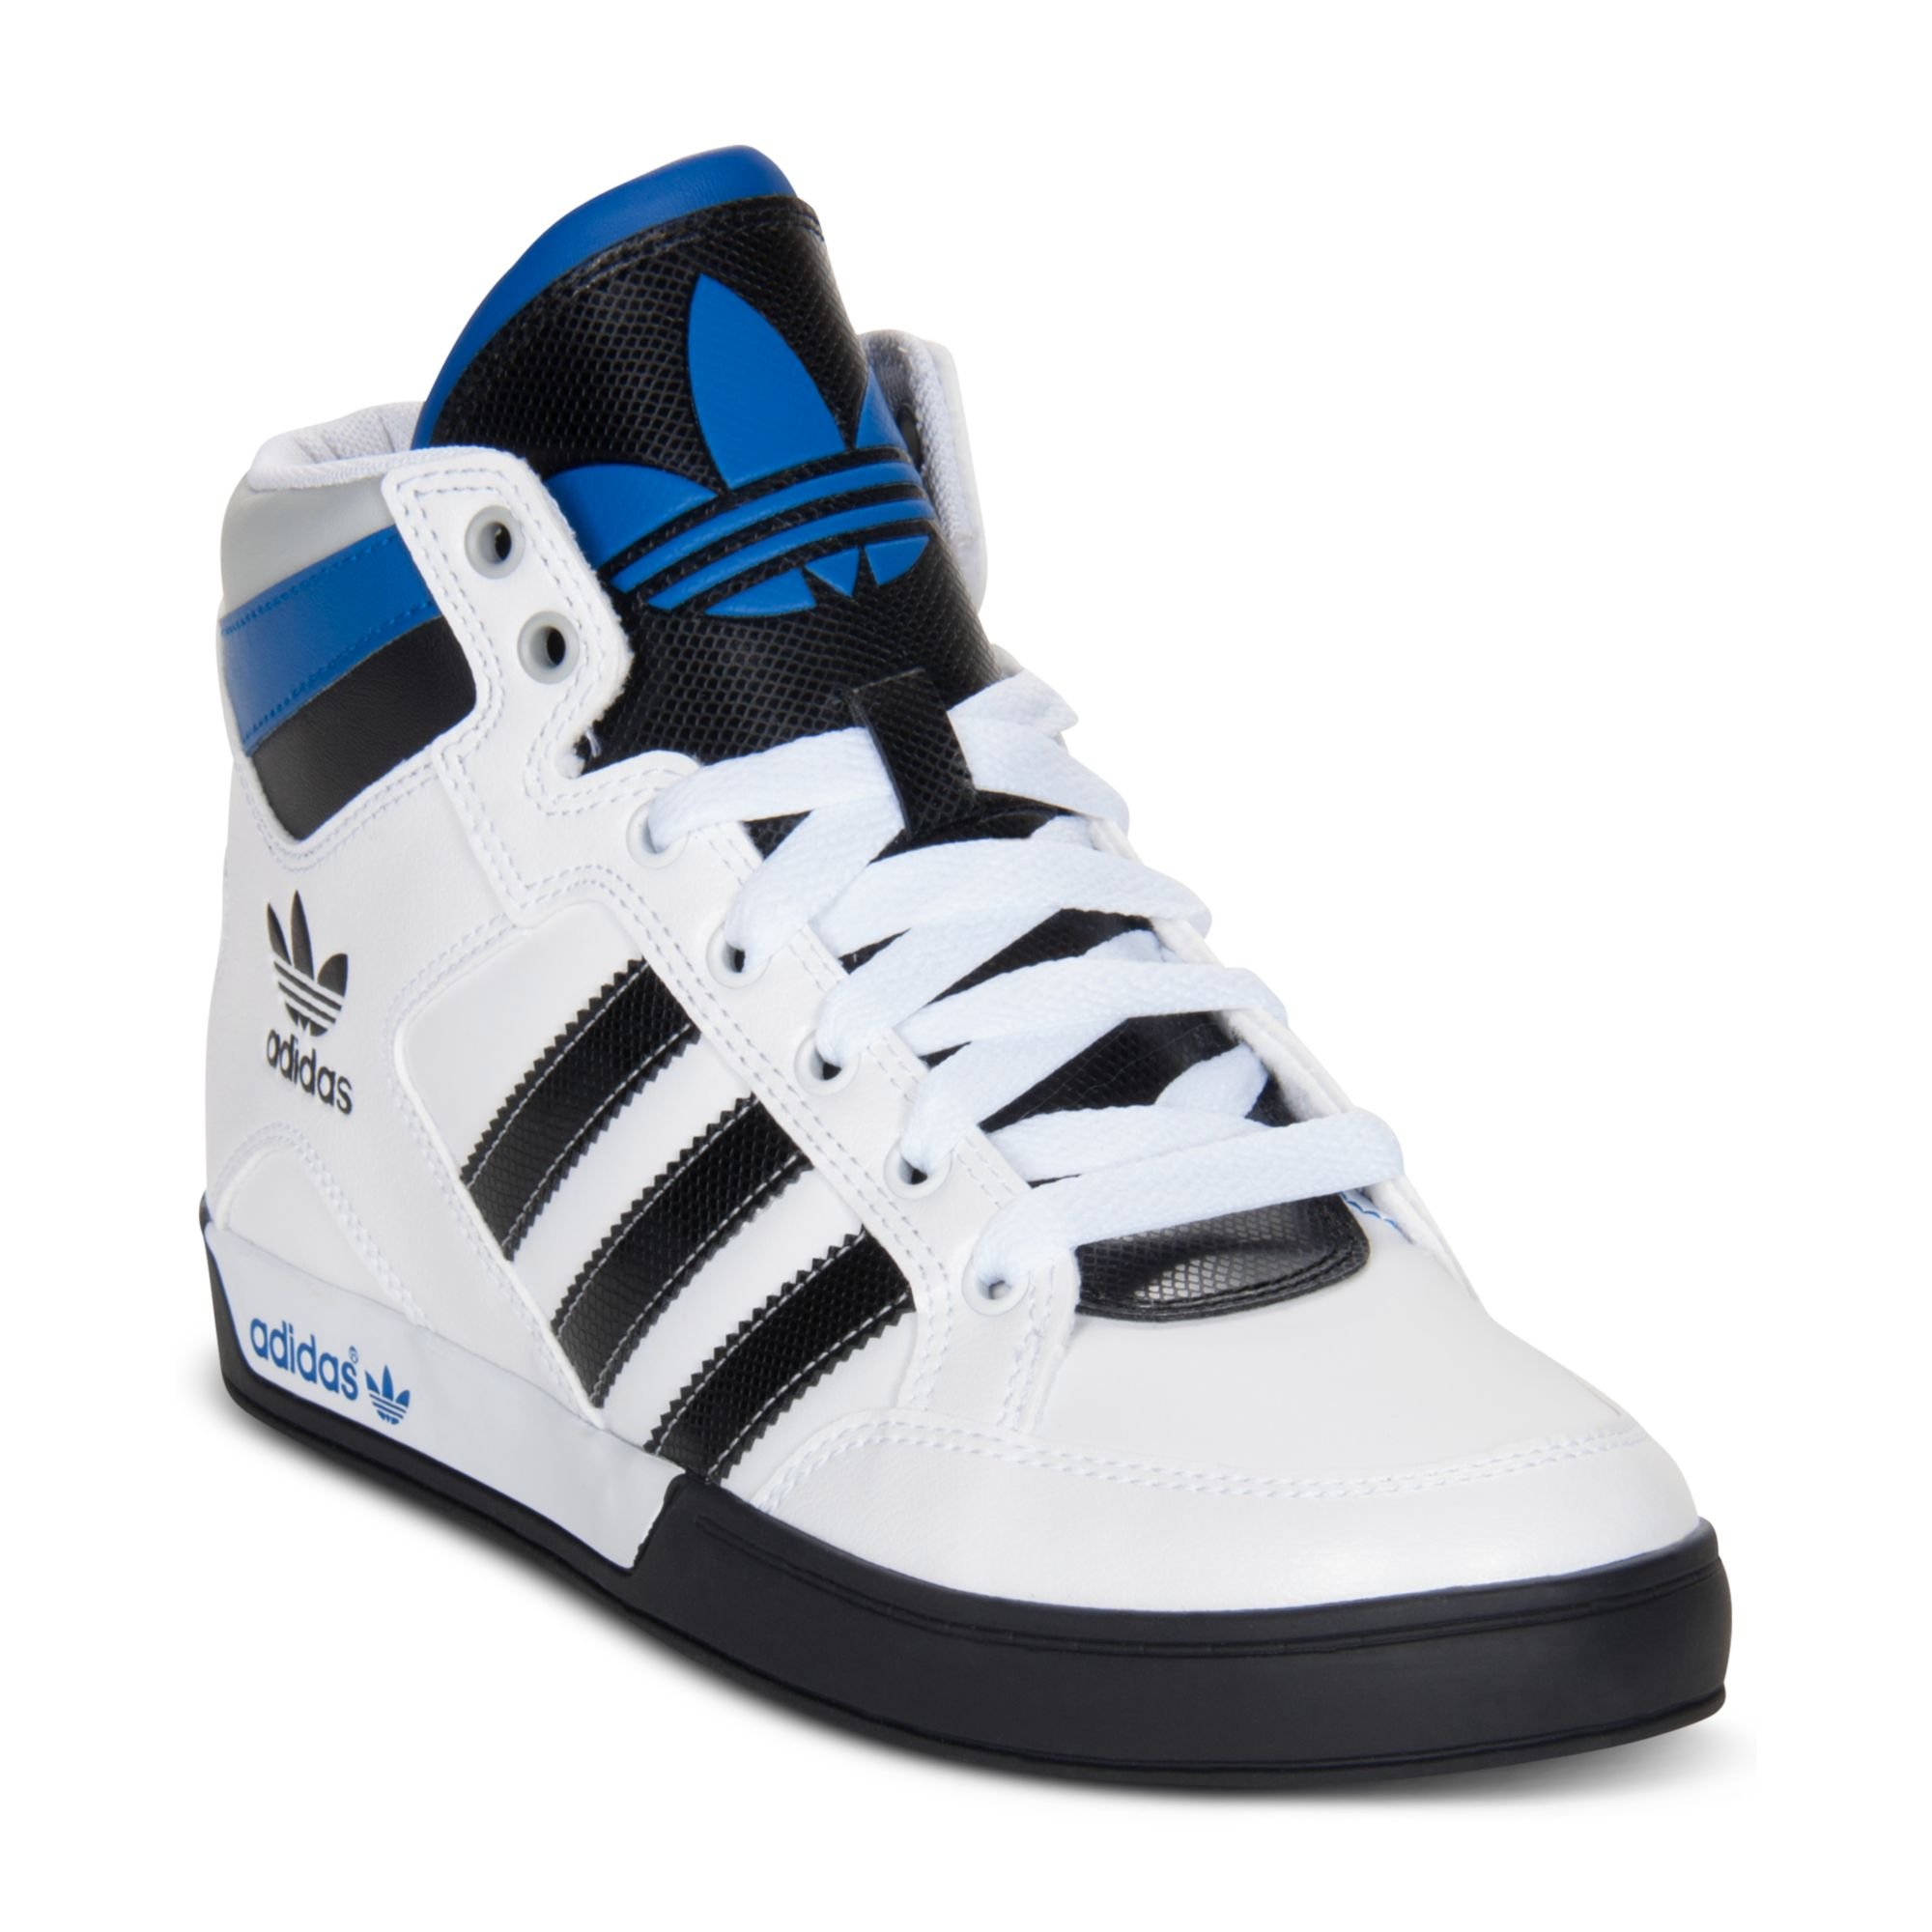 adidas Originals Hard Court Hi Casual Sneakers in White/Black/Blue ...